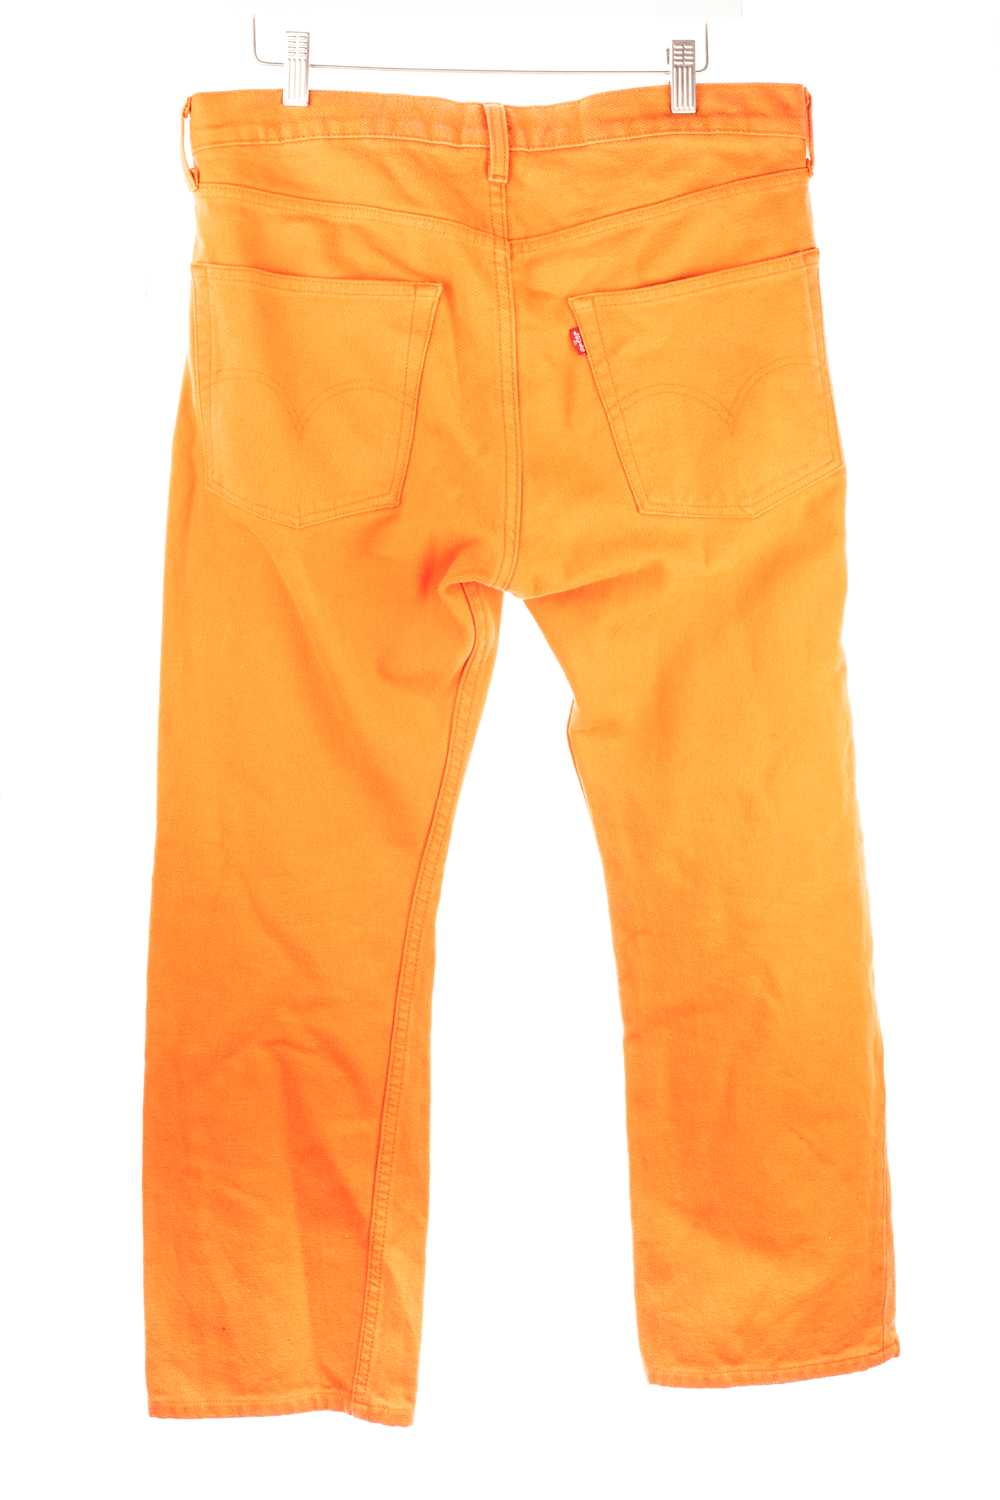 Orange Poetry Pants - image 2